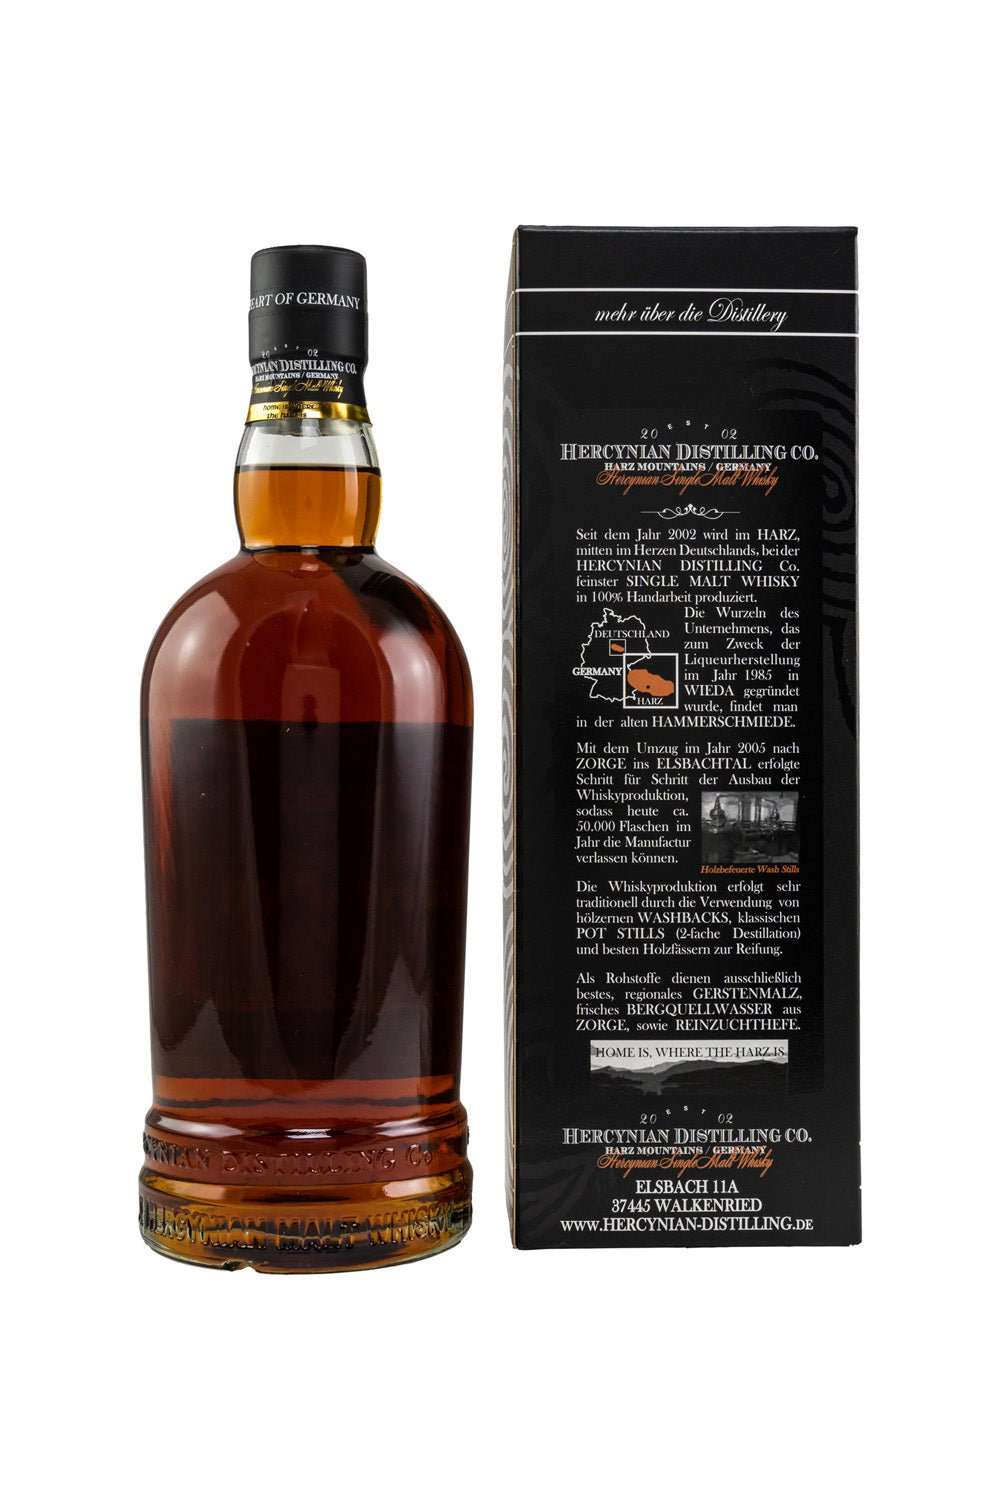 Elsburn Cosy Winter VII 2021 Hercynian Single Malt Whisky 7. Edition 56,2% vol. 700ml - Maltimore